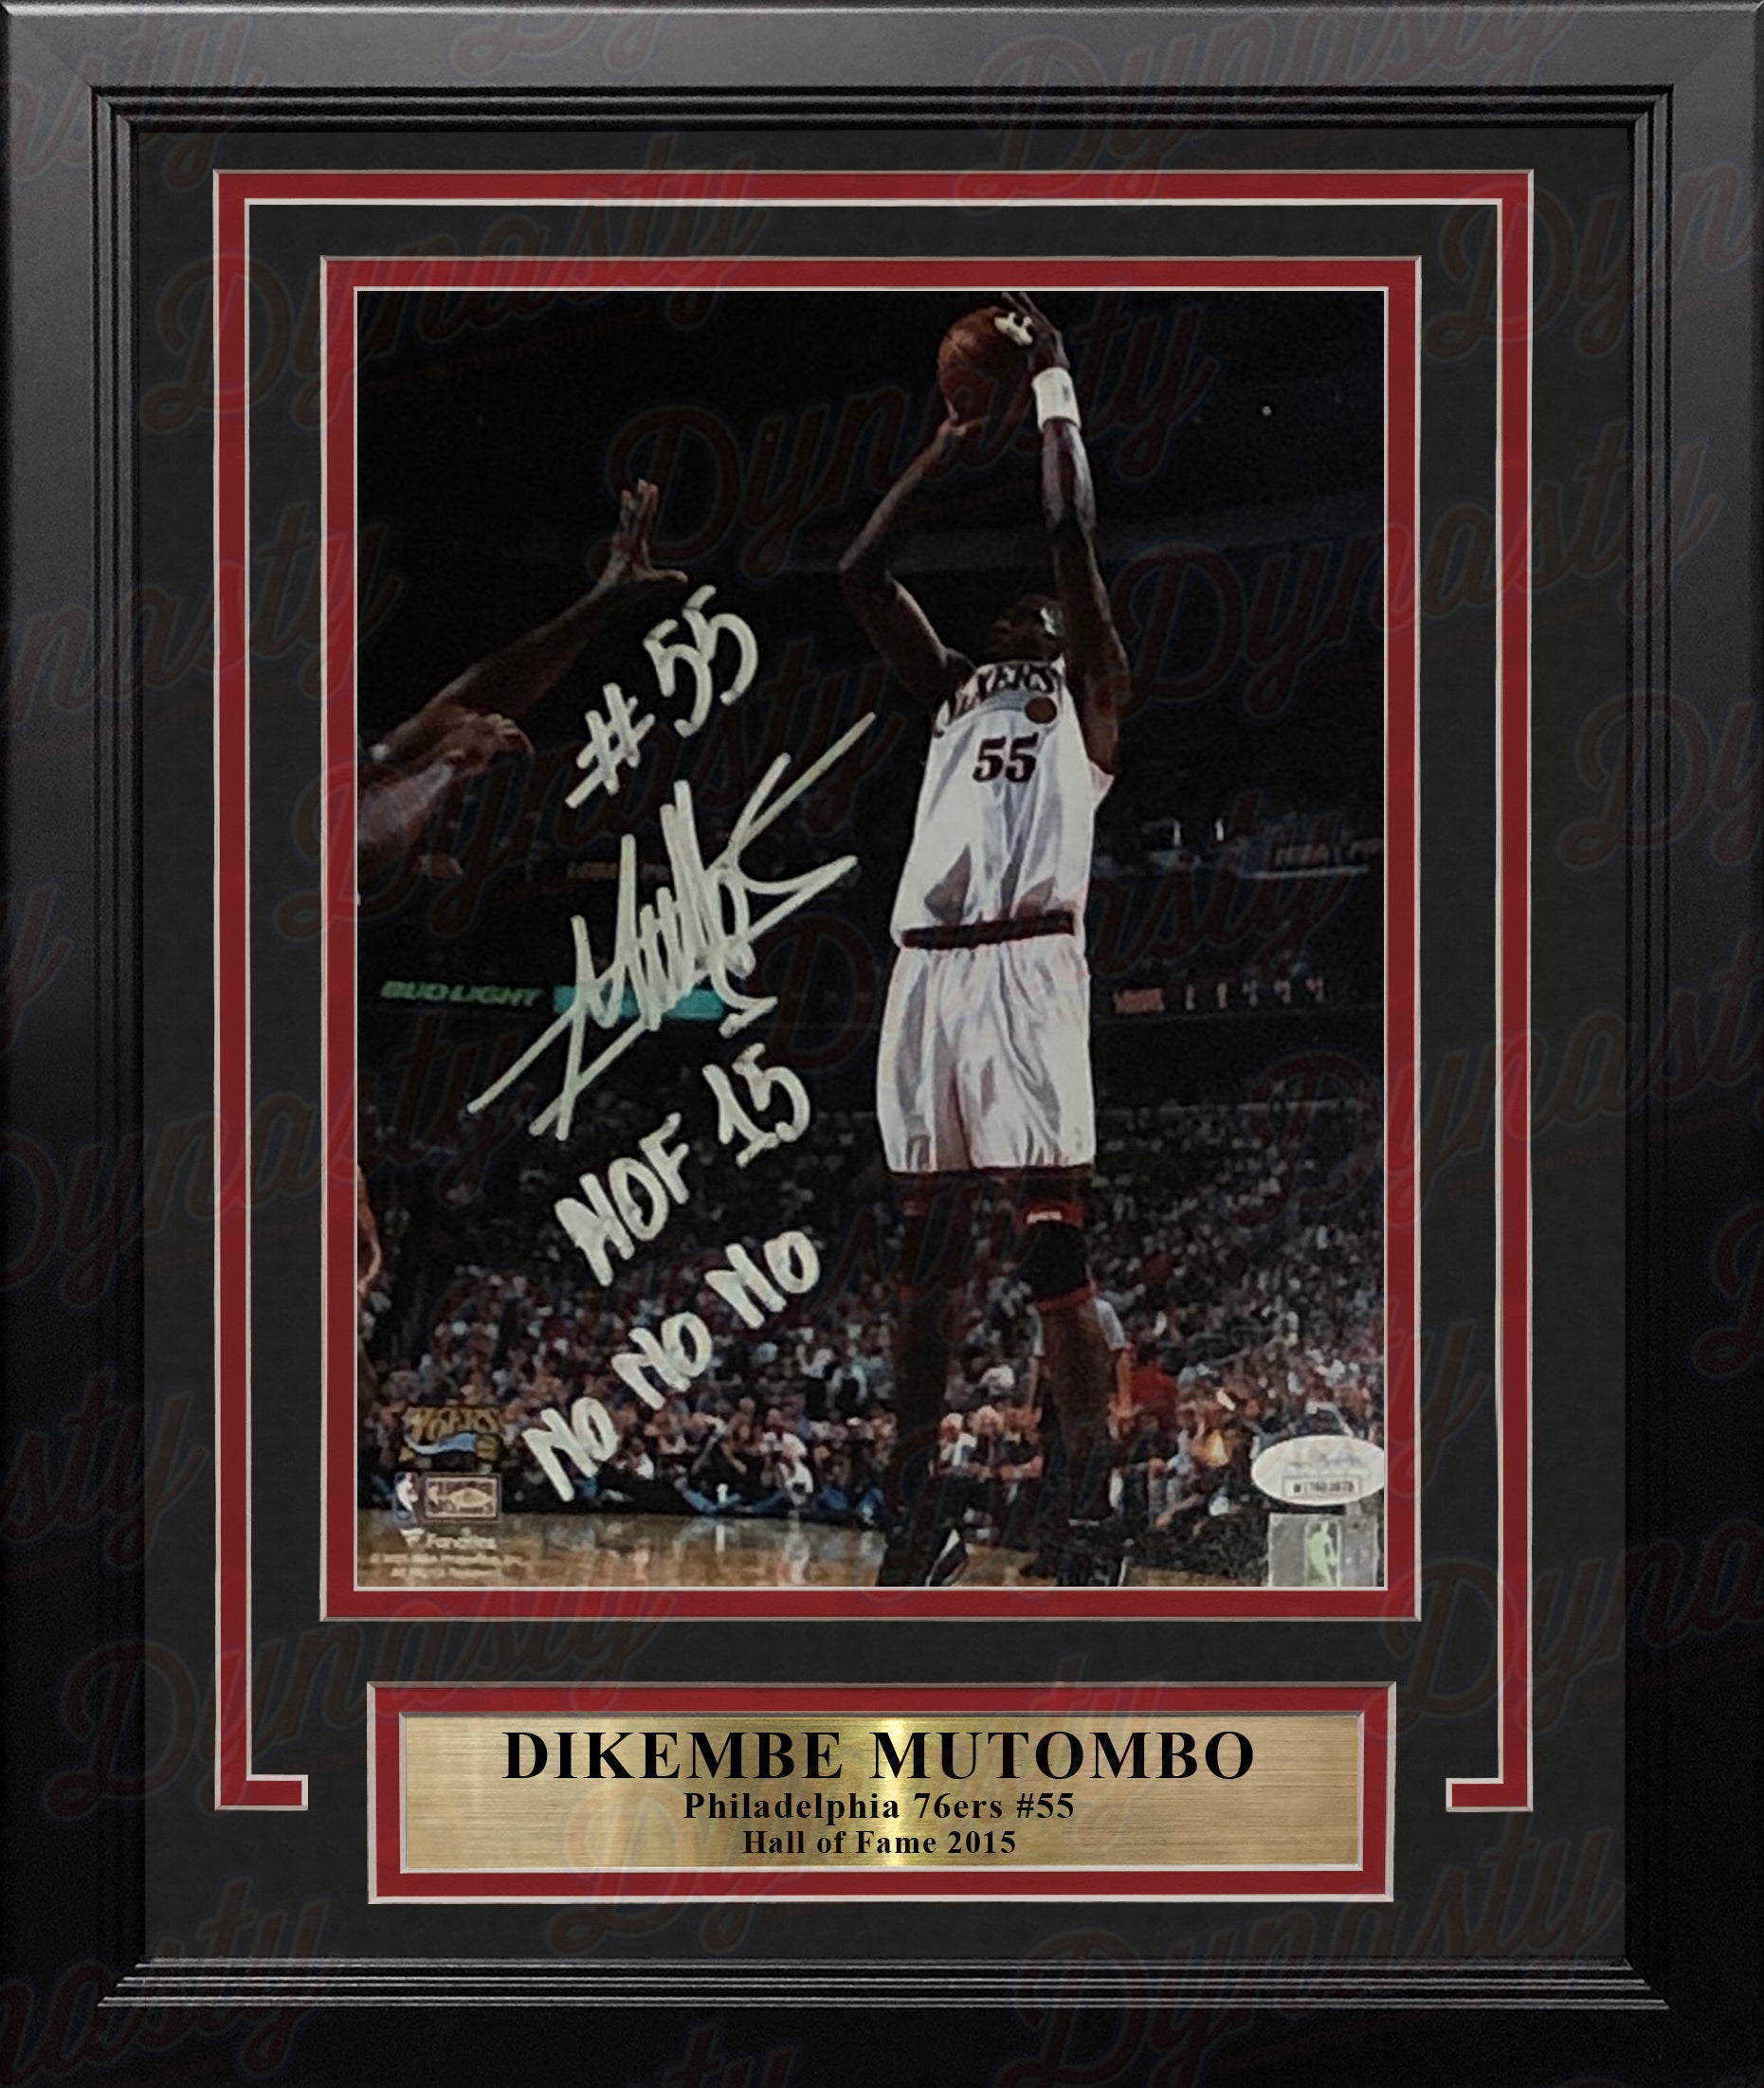 Dikembe Mutombo v Shaq Philadelphia 76ers Autographed Framed Basketball Photo Inscribed Hall of Fame - Dynasty Sports & Framing 